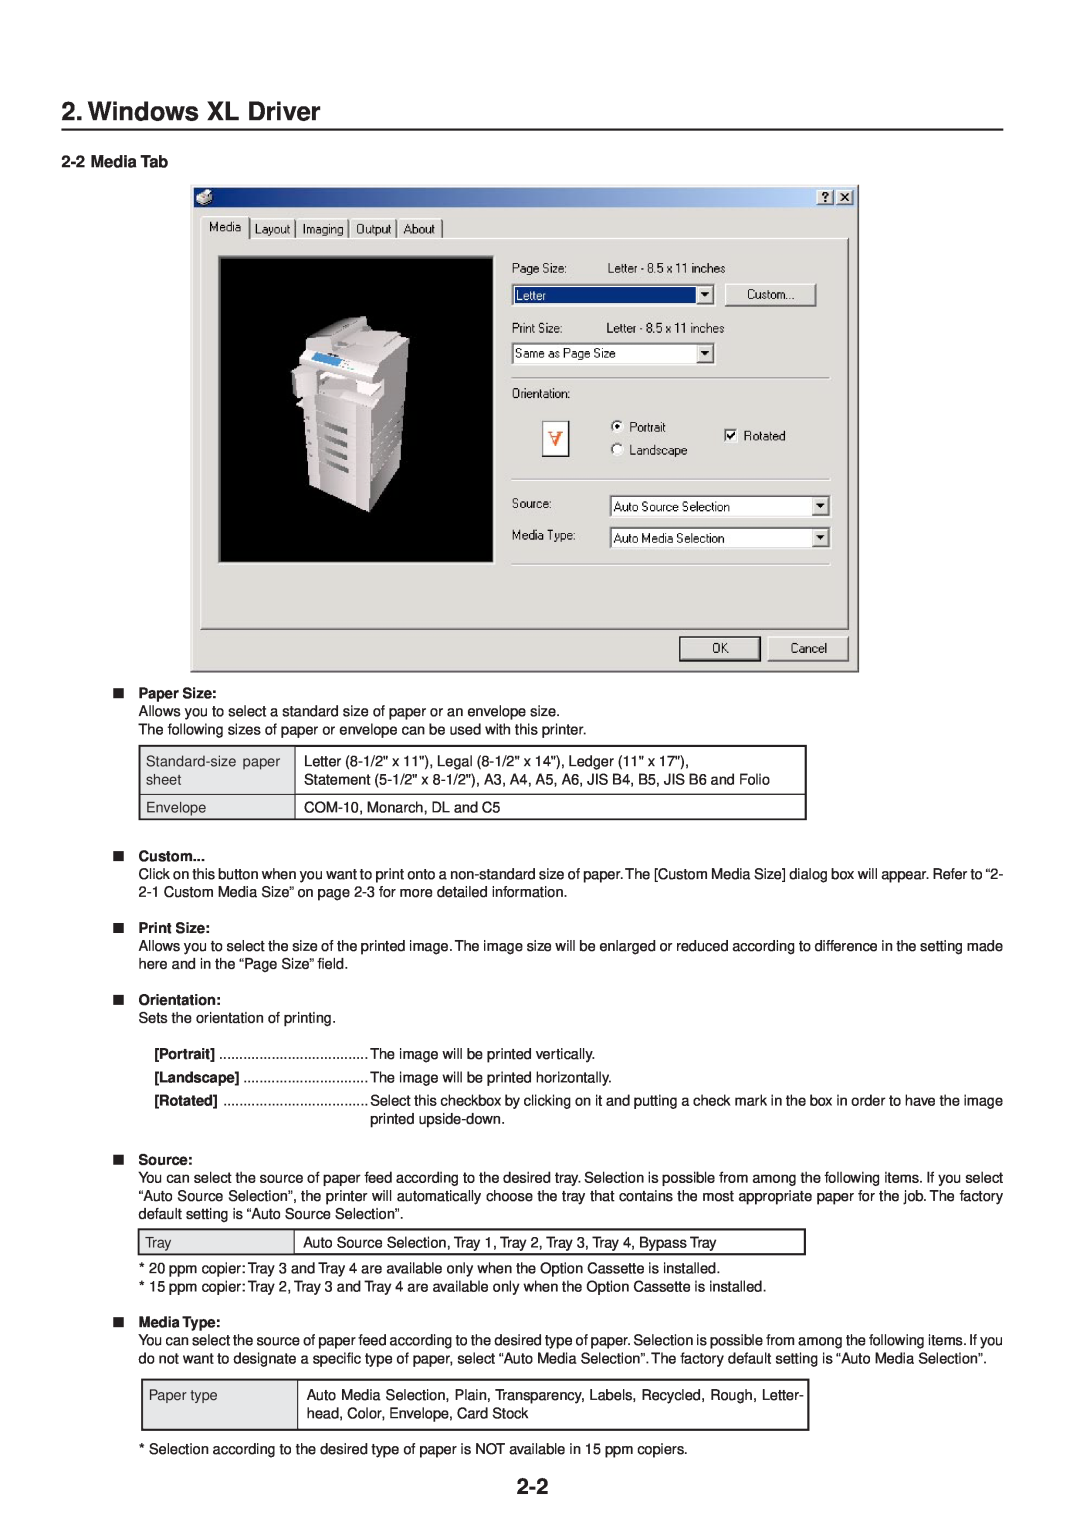 IBM Printing System manual Windows XL Driver, Media Tab, Paper Size, Custom, Print Size, Orientation, Source, Media Type 